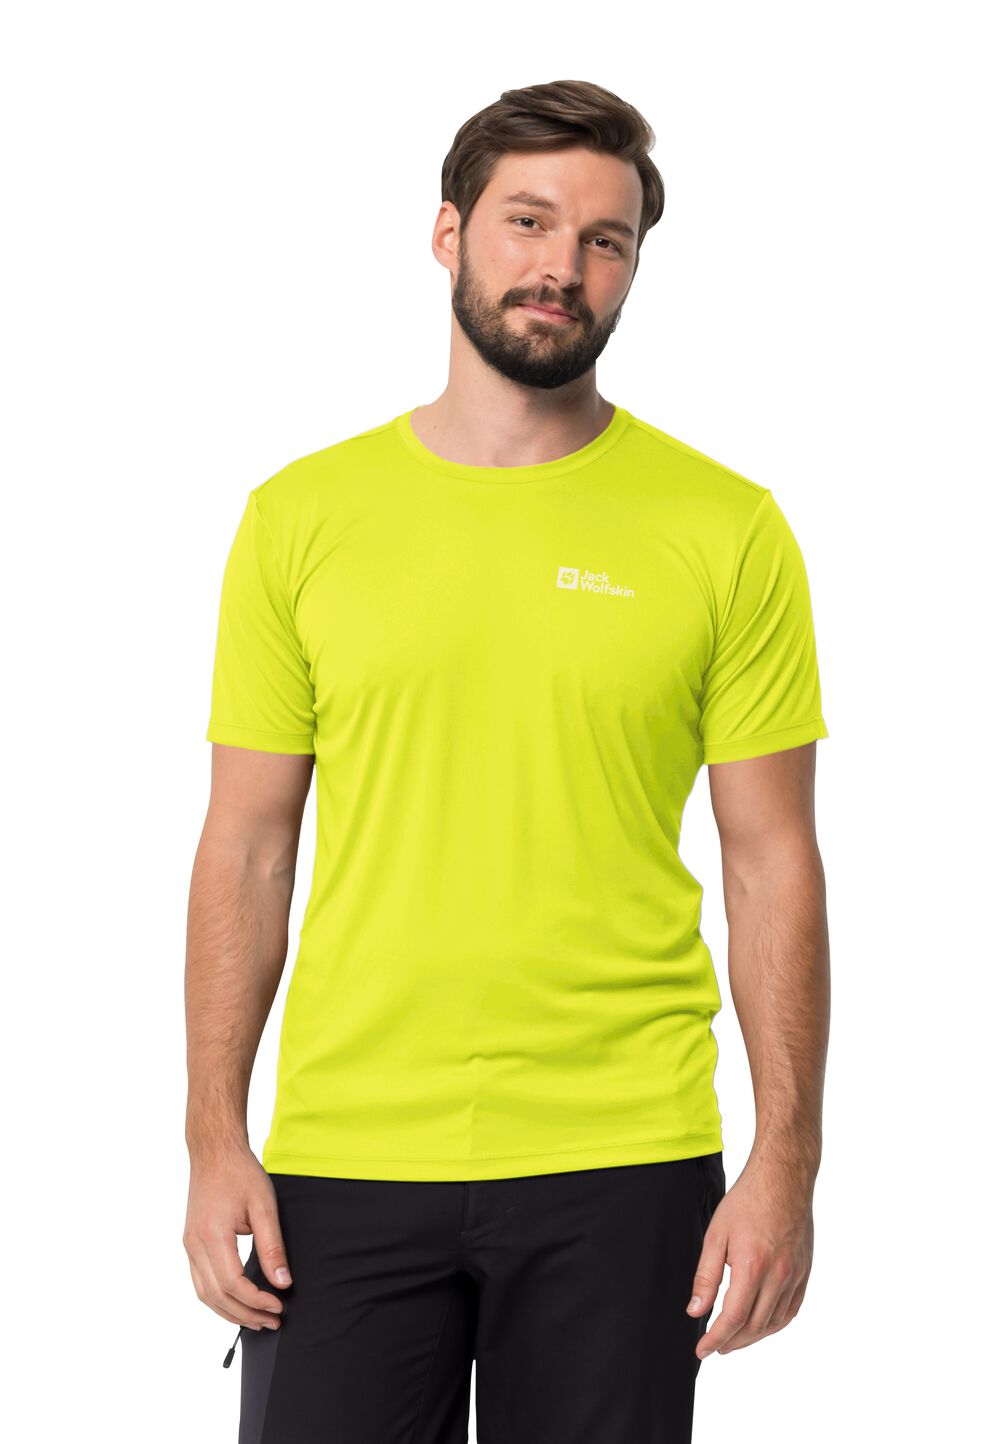 Jack Wolfskin Tech T-Shirt Men Functioneel shirt Heren 3XL oranje firefly